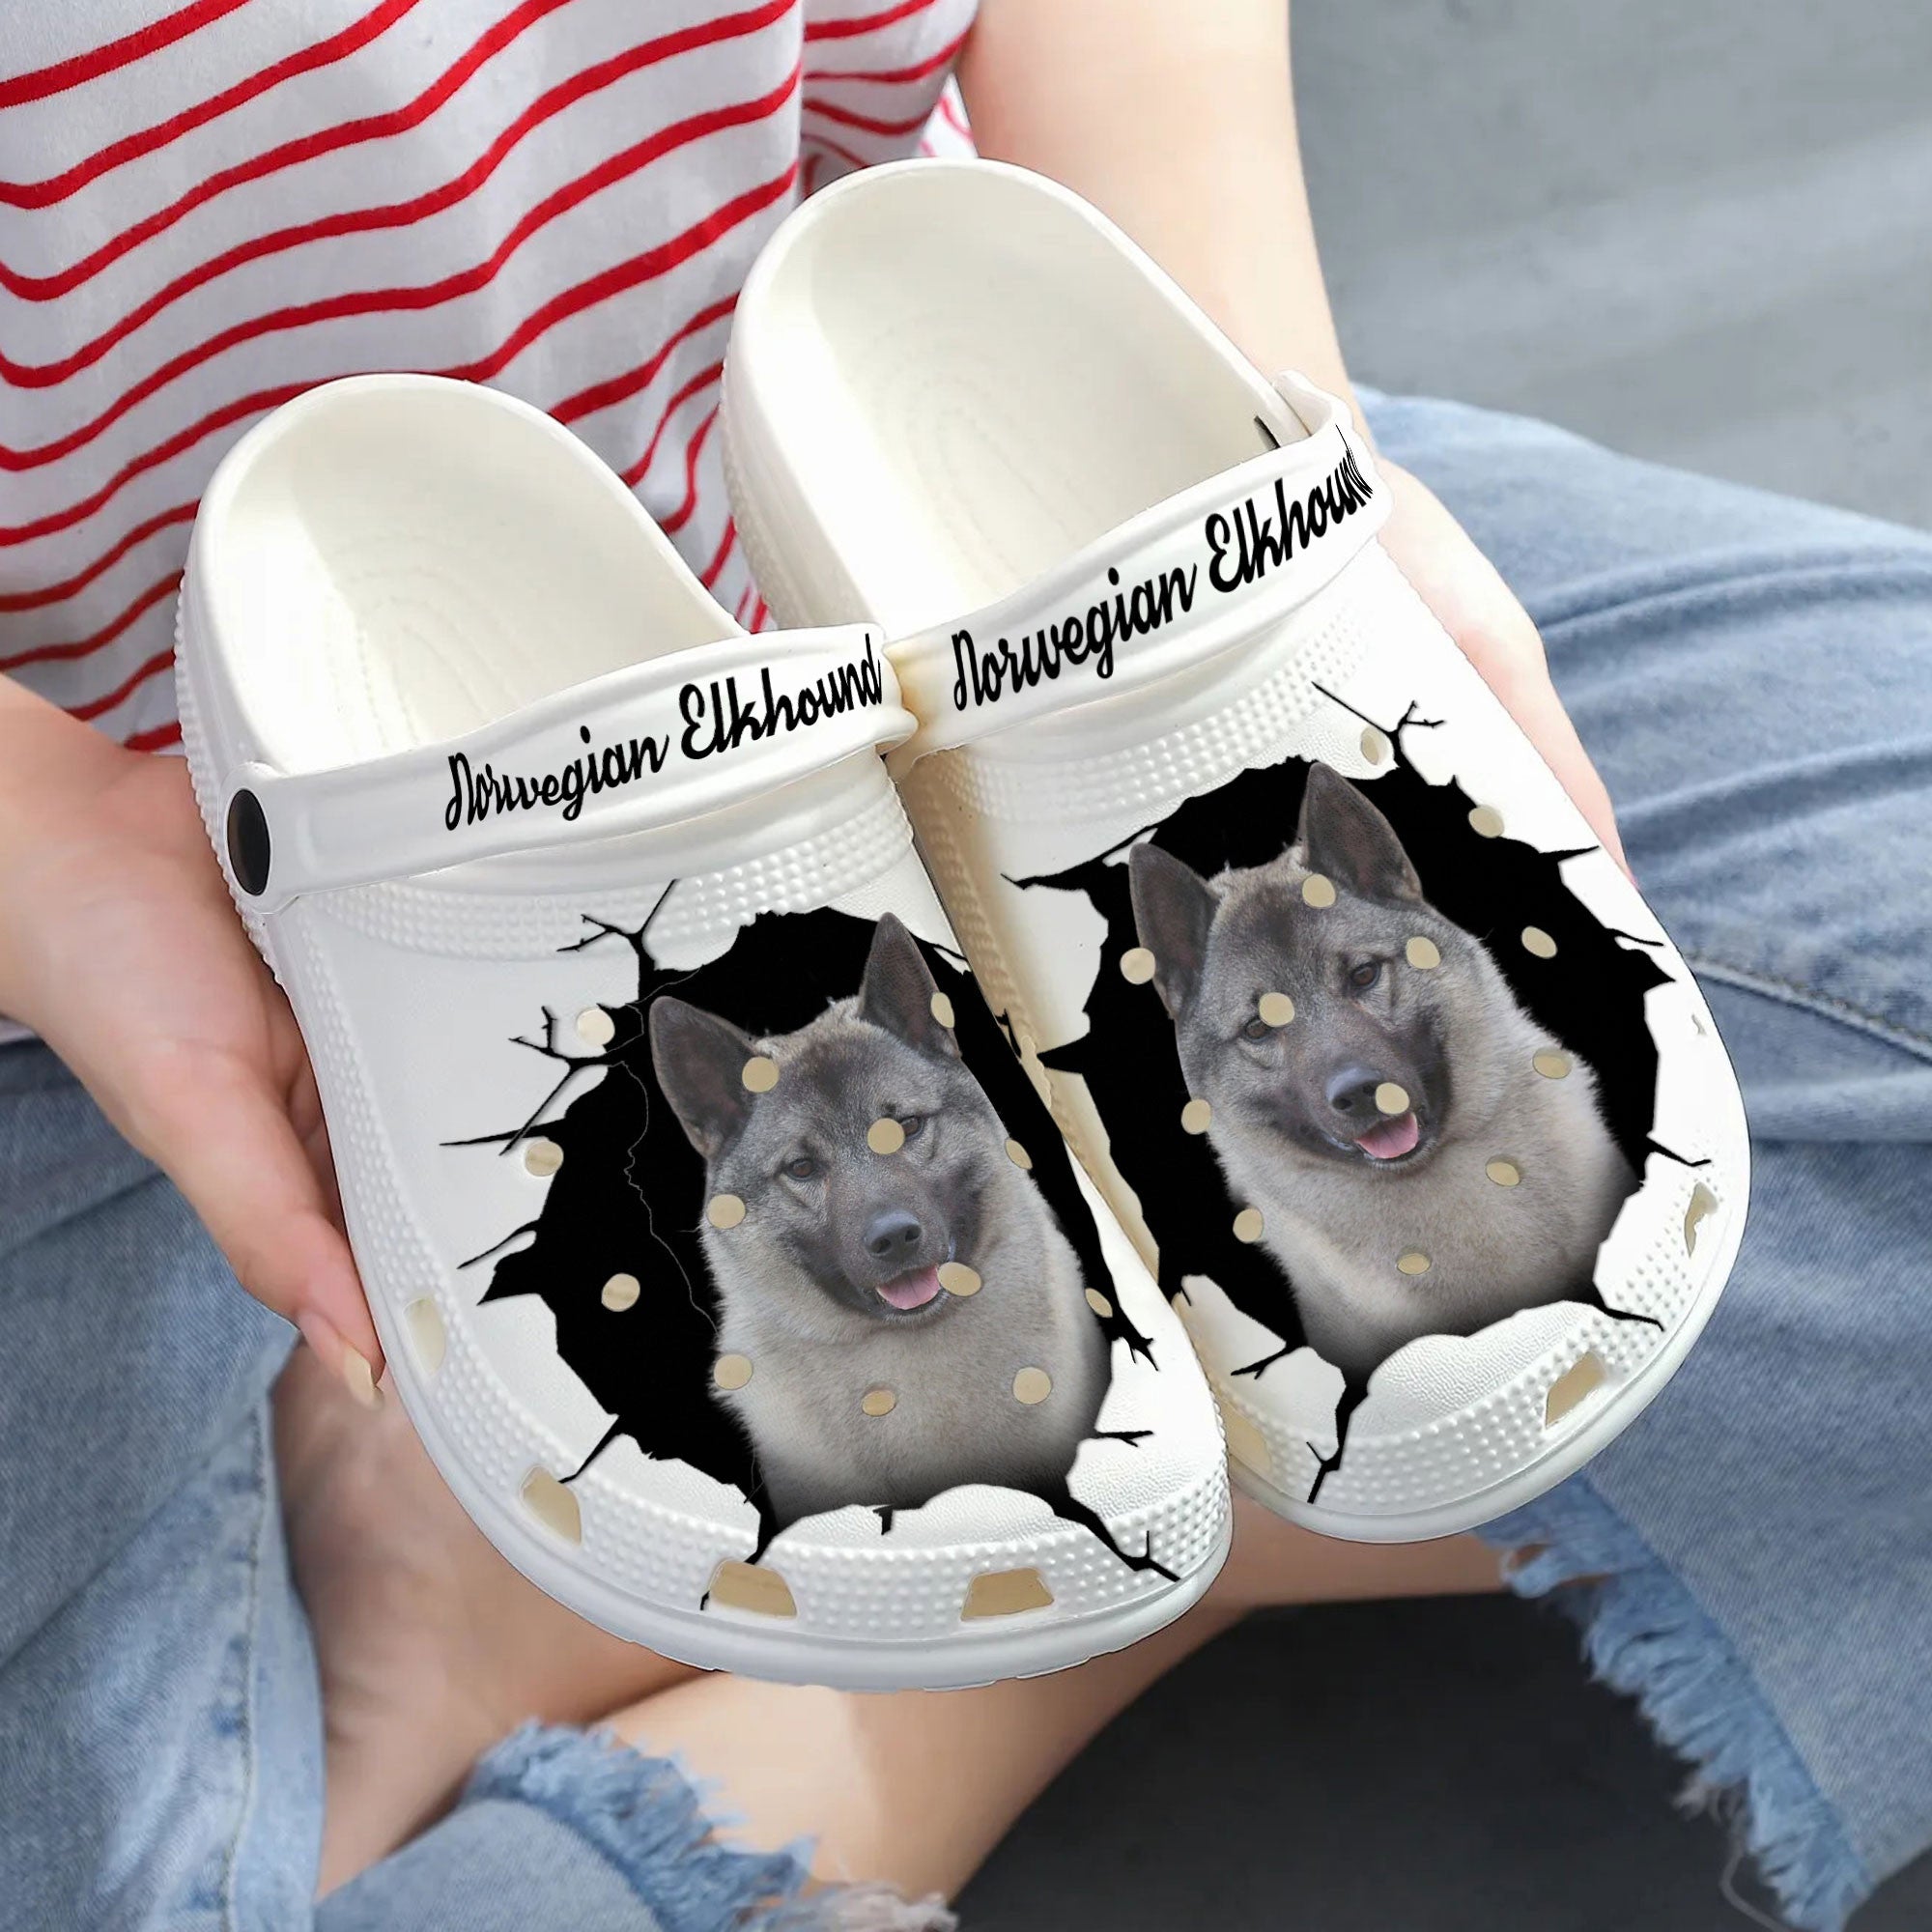 Norwegian Elkhound - 3D Graphic Custom Name Crocs Shoes